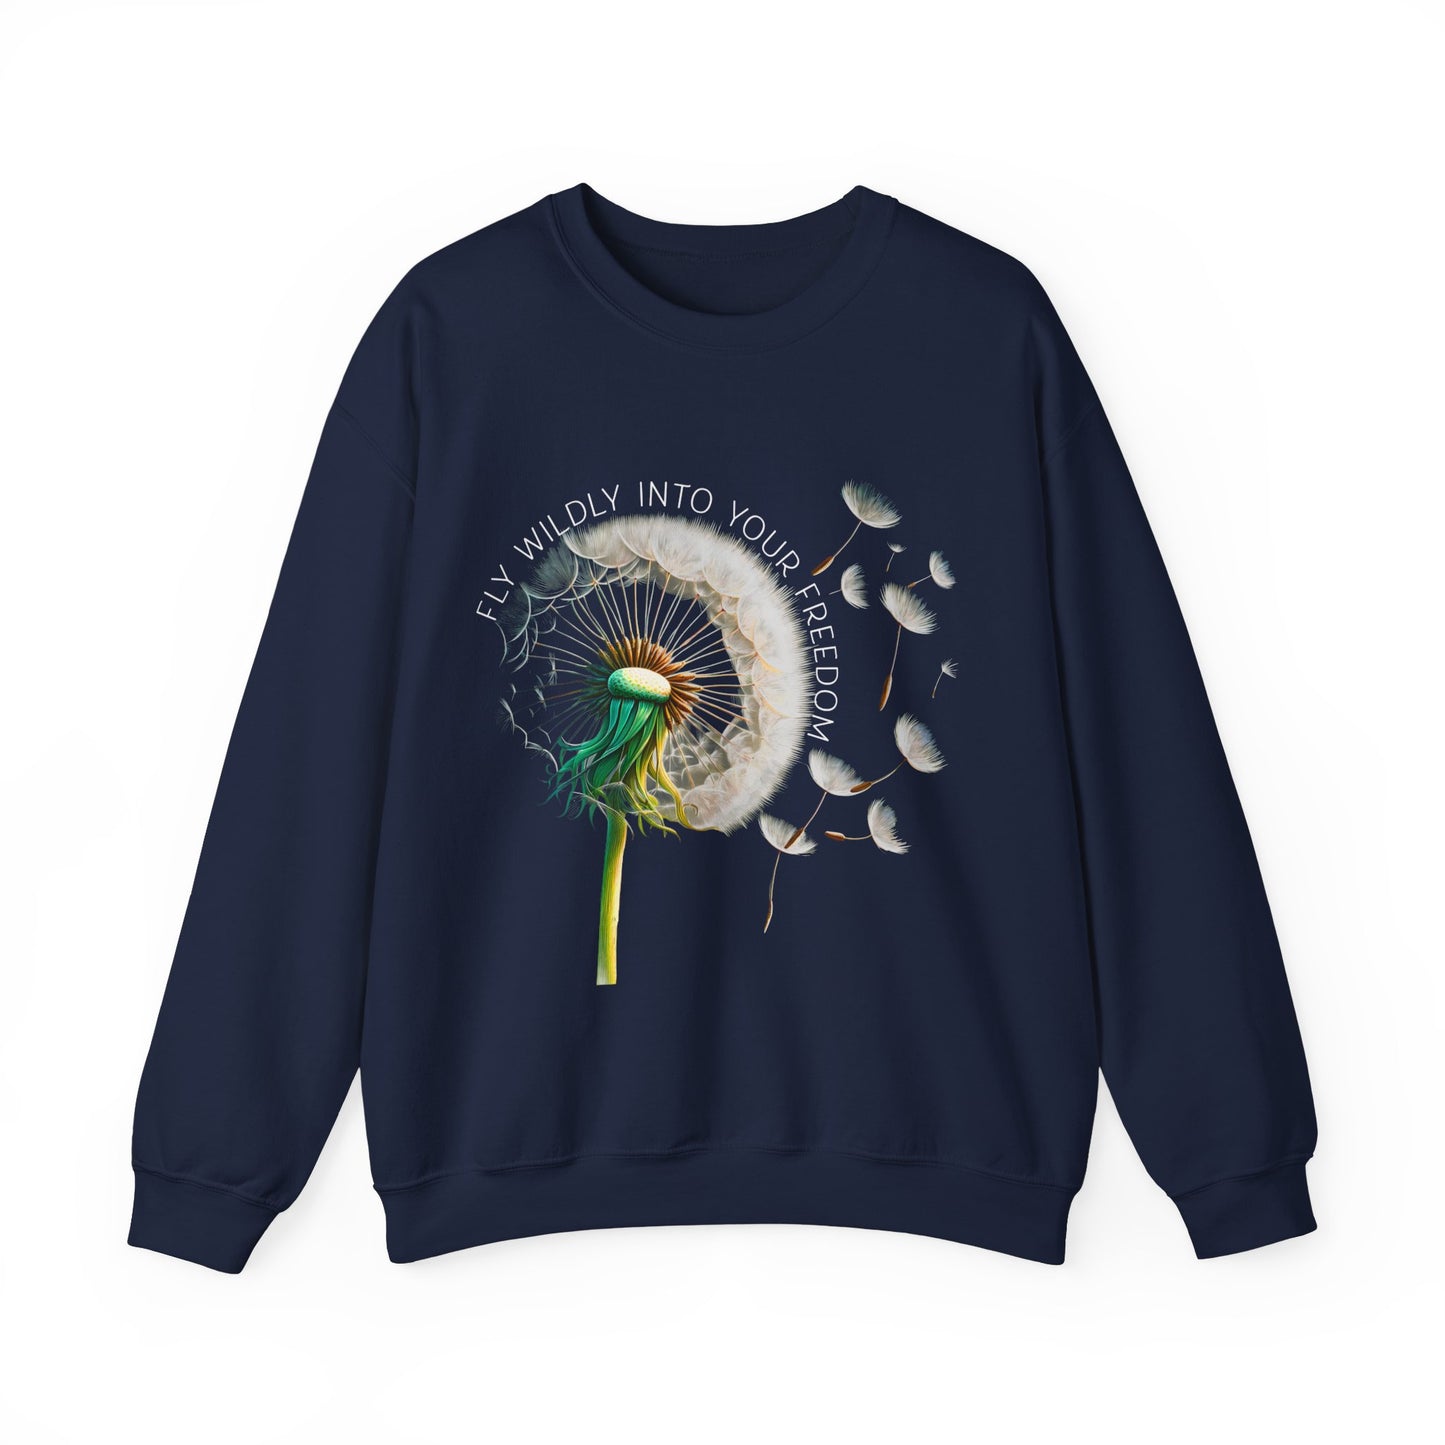 Dandelions Blowing Fly Wildly Into Your Freedom Inspirational Crewneck Sweatshirt